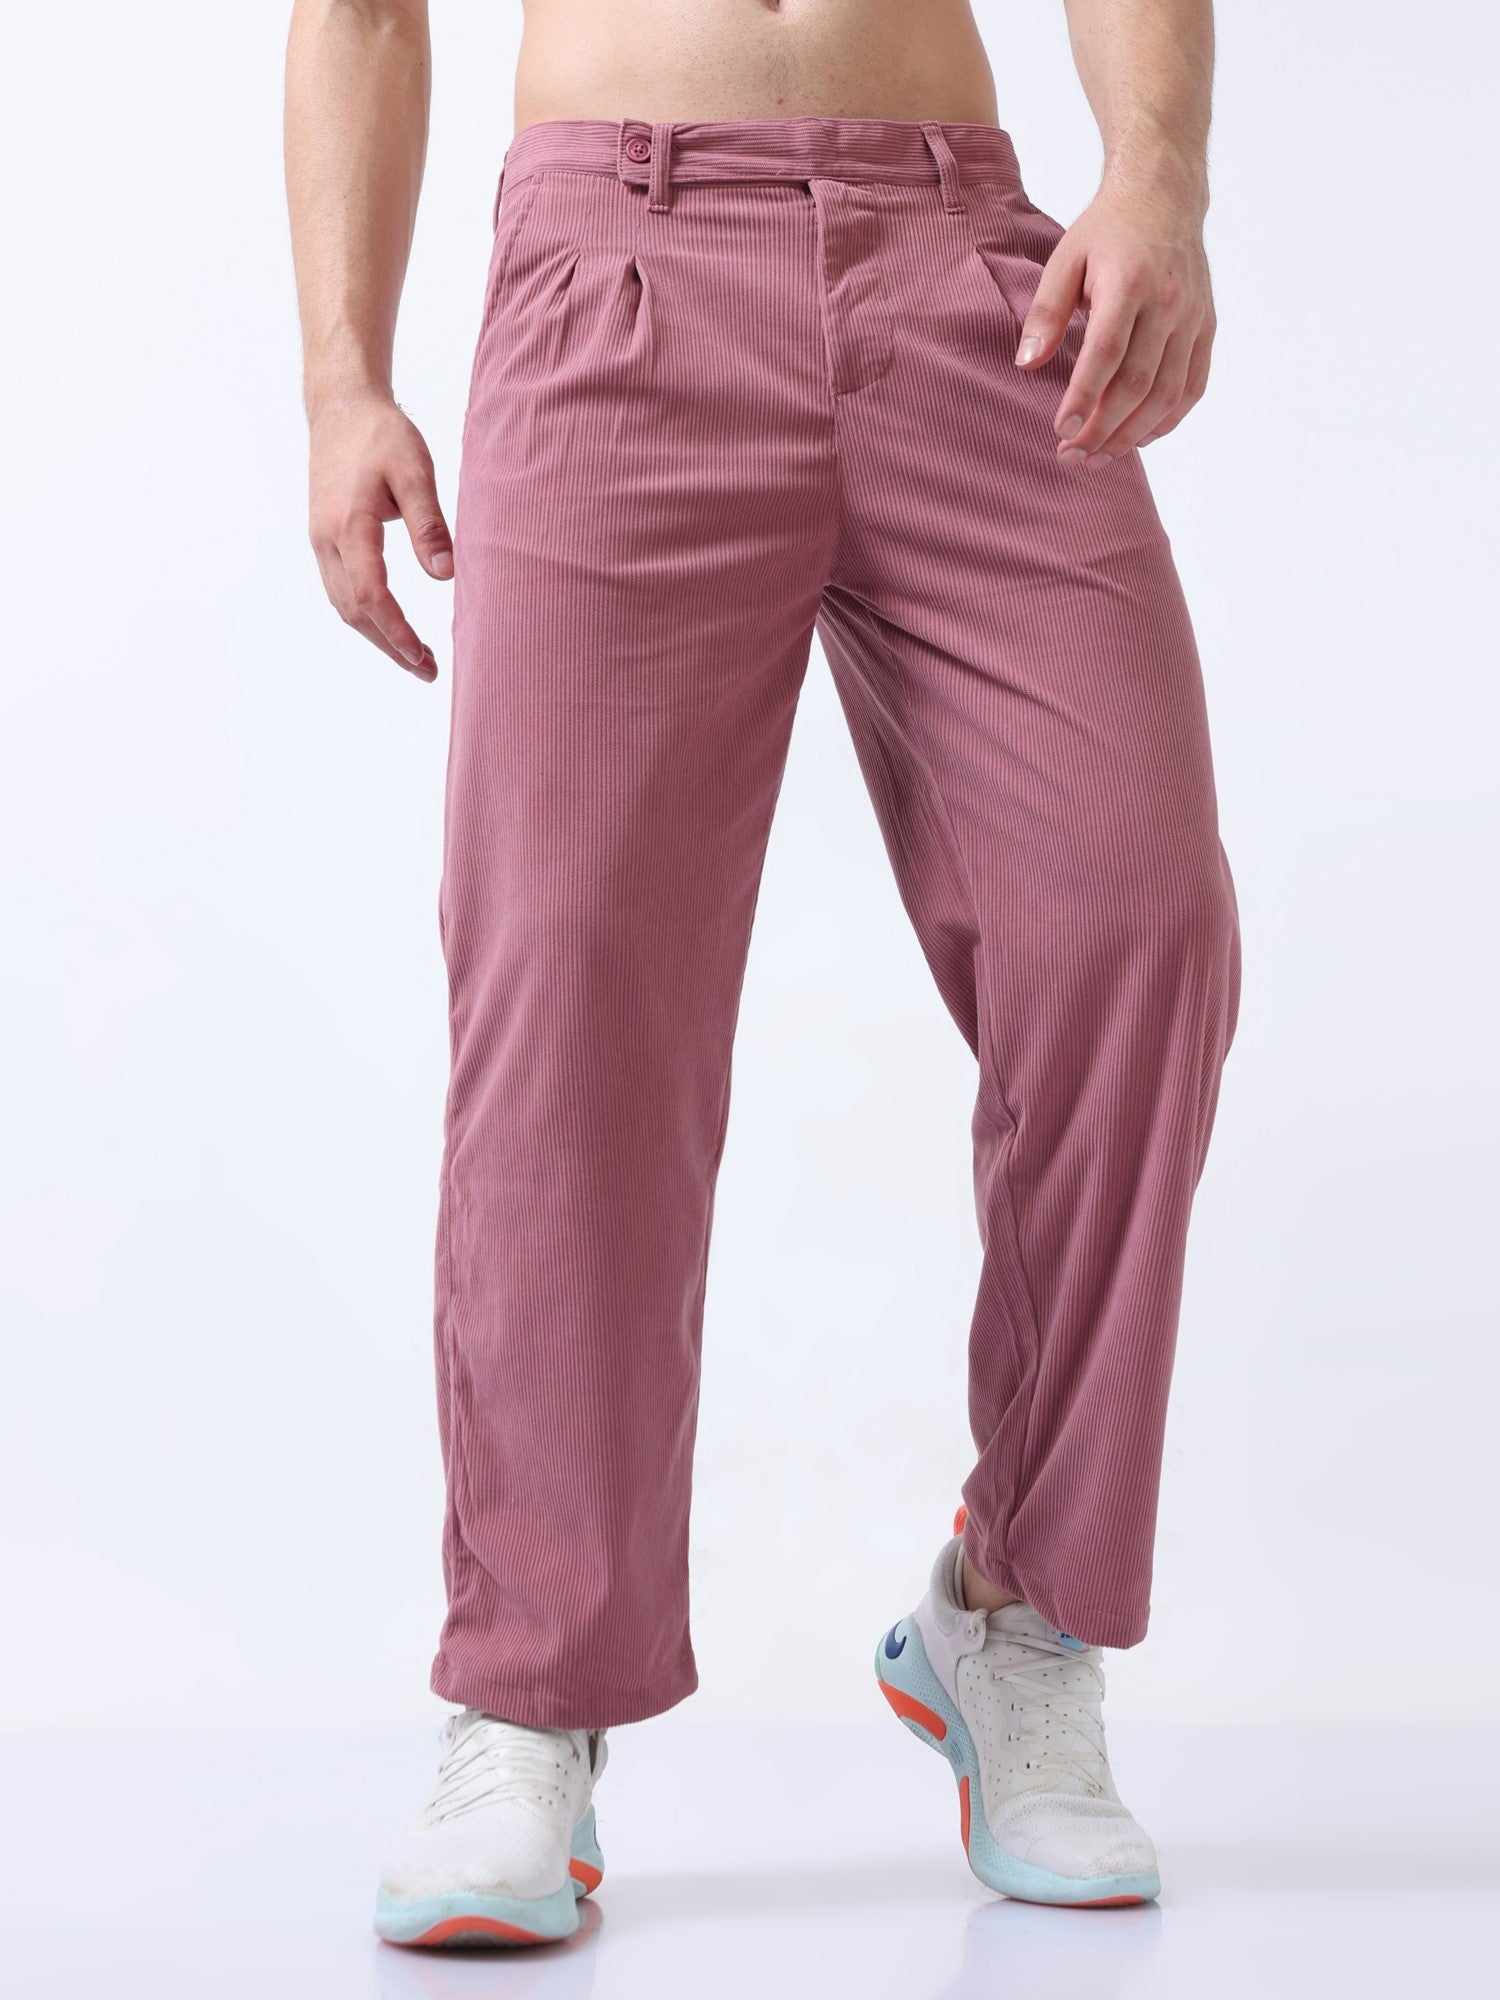 Men Opium Pink Pants| Casual Lines Pant| Comfortable Quality| Sainly– SAINLY